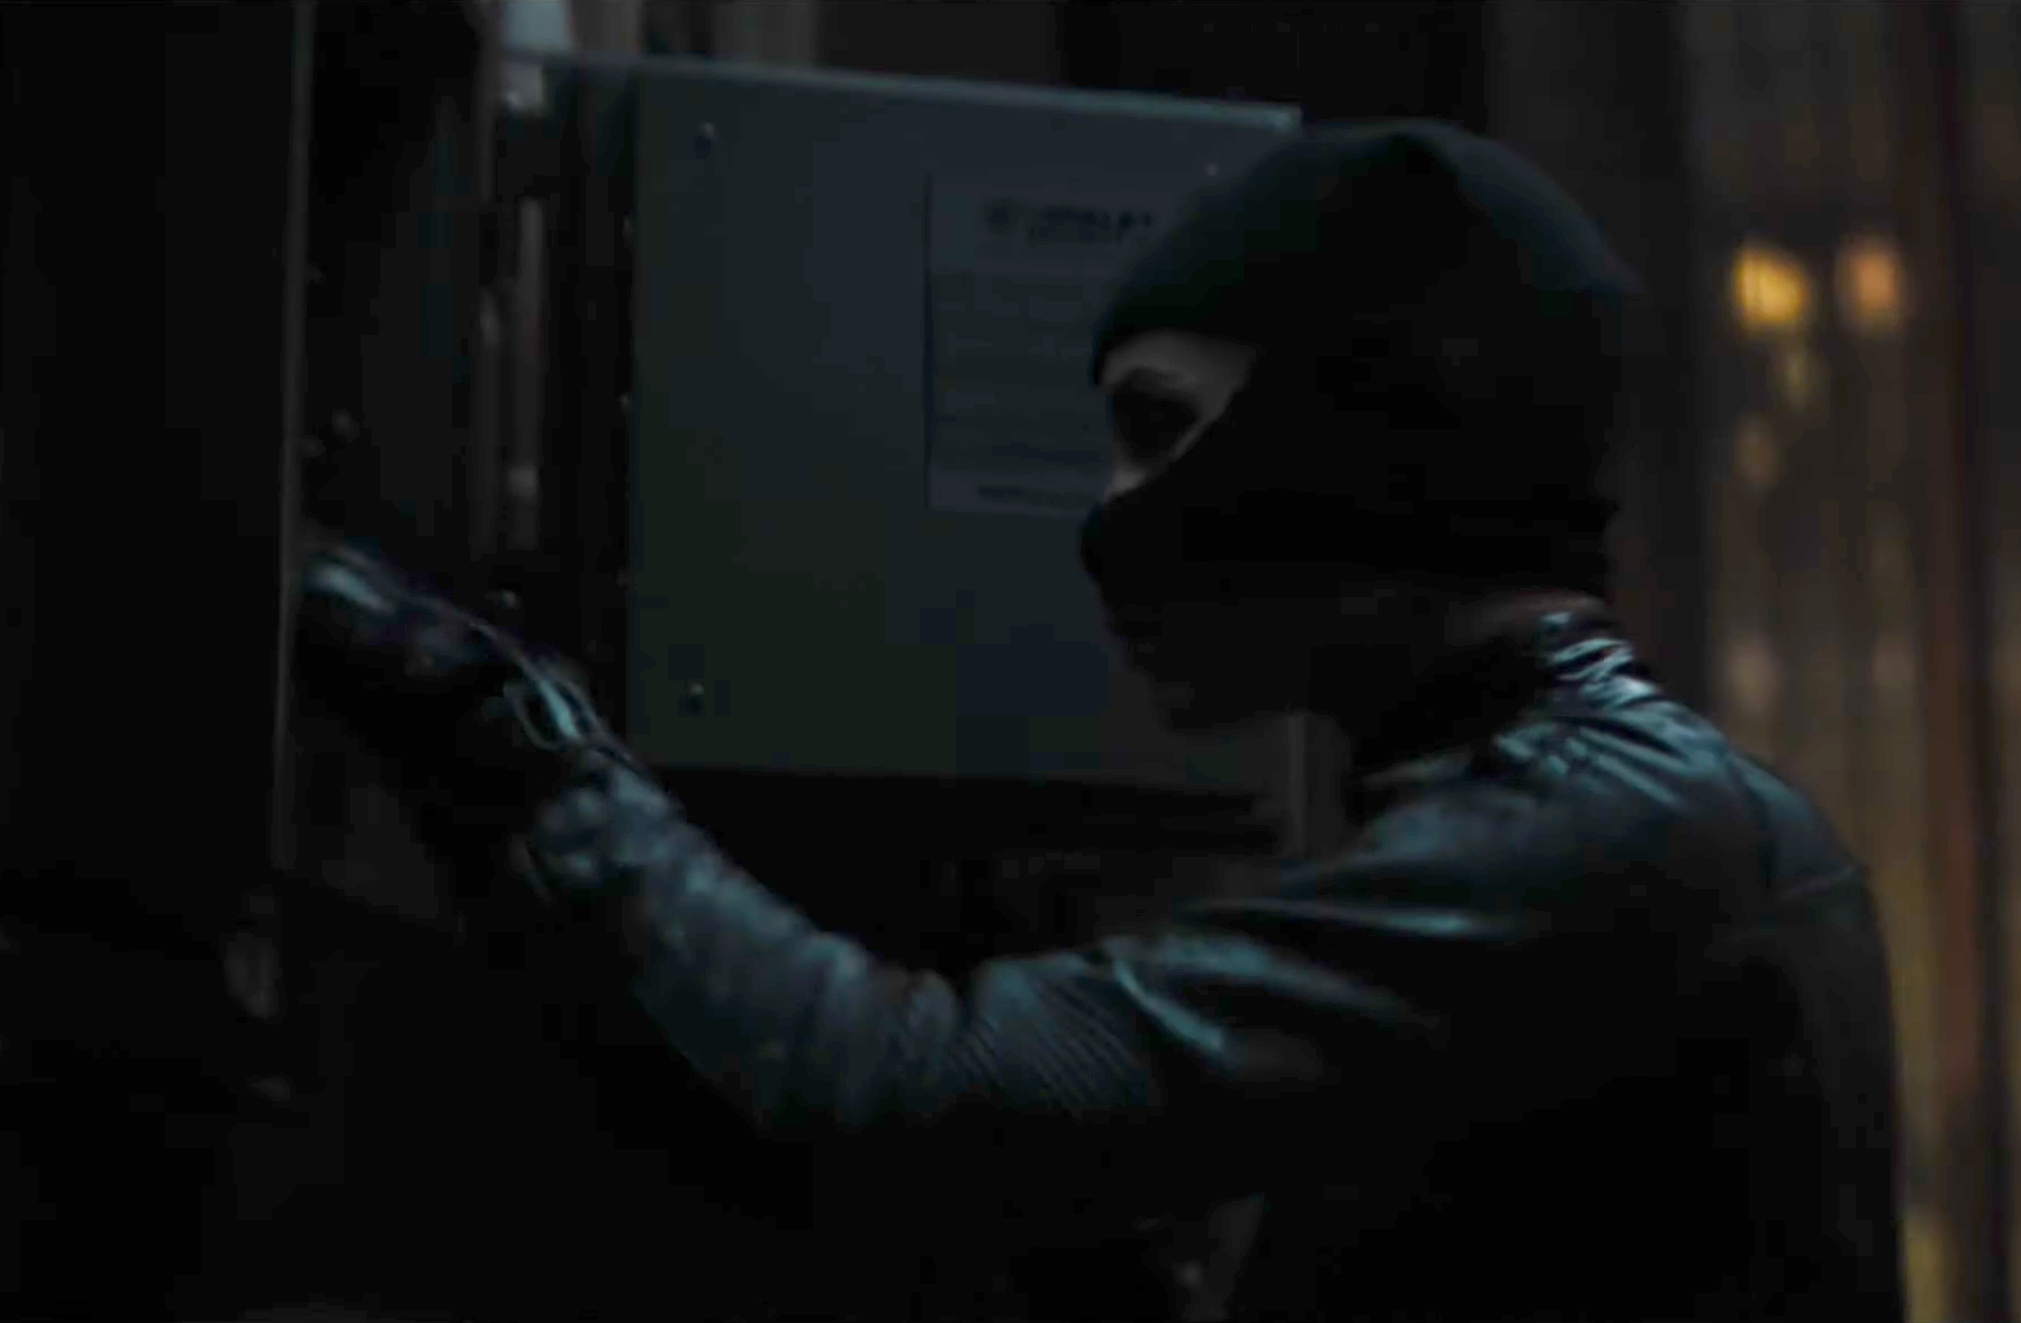 Burglar opening a safe